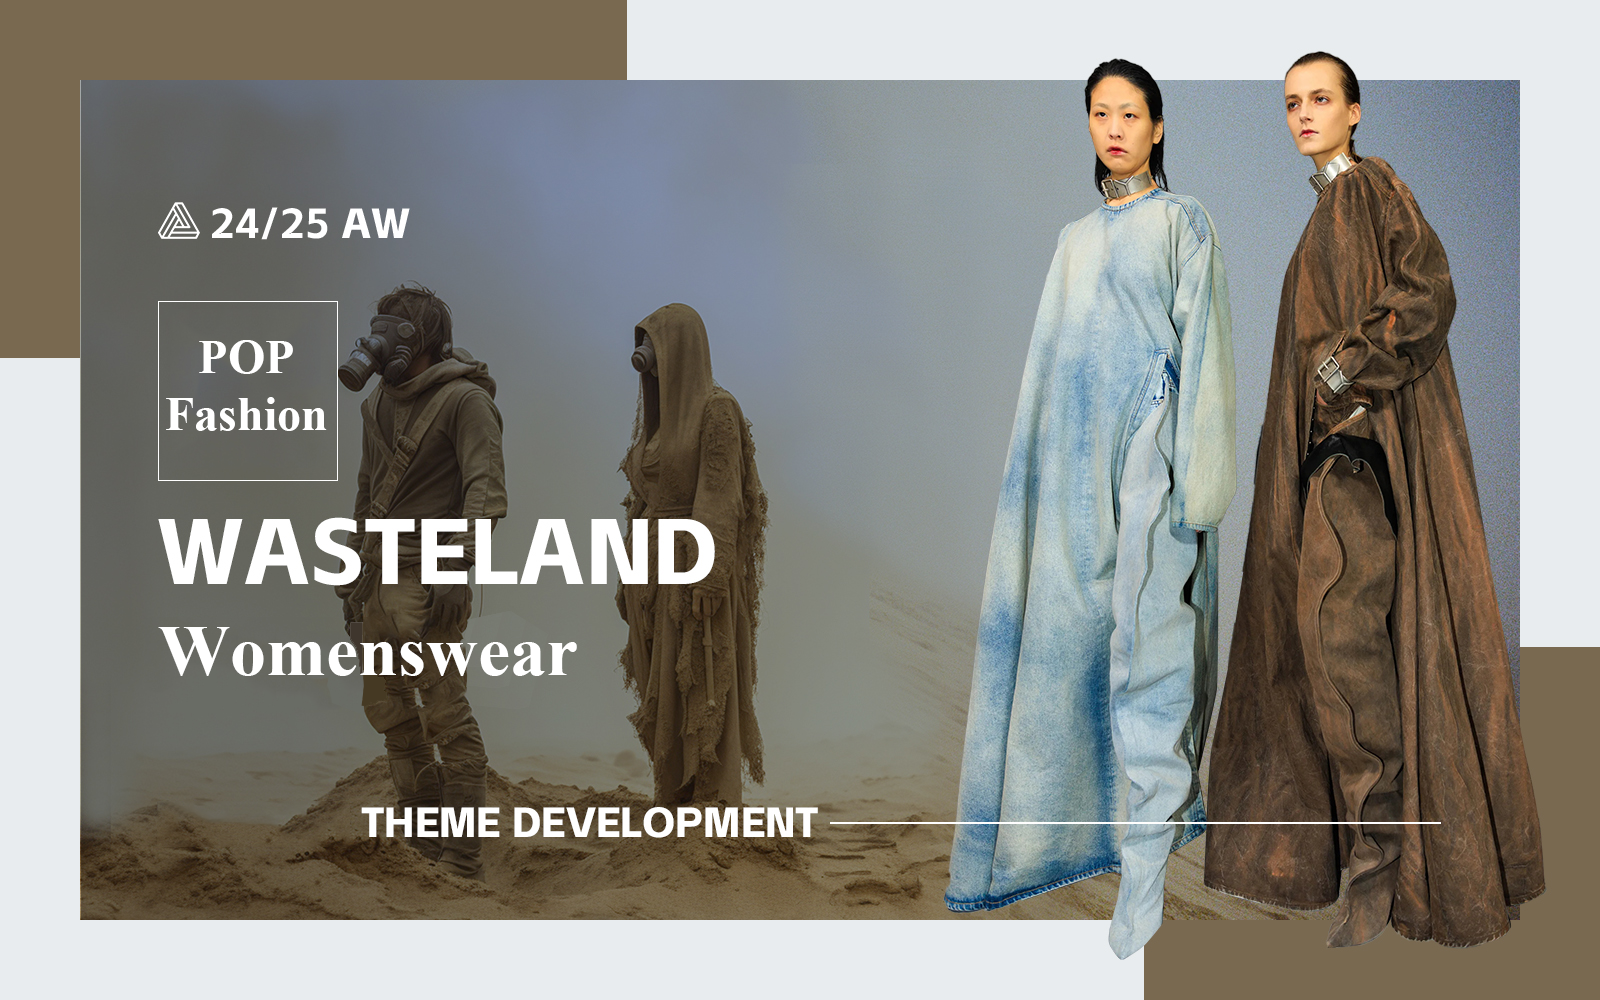 Wasteland -- The Design Development of Womenswear